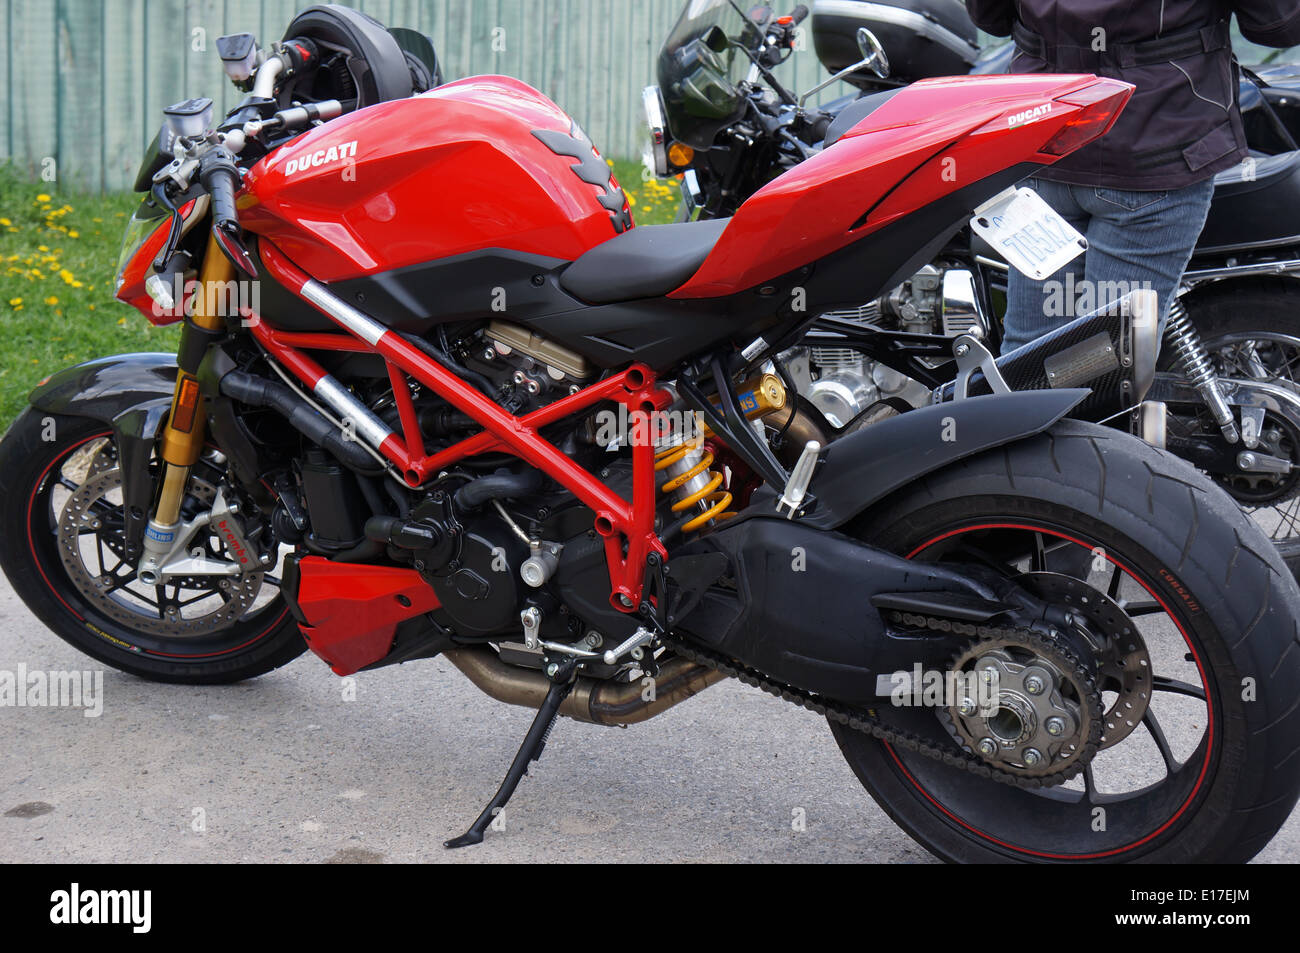 Moto Ducati Foto Stock